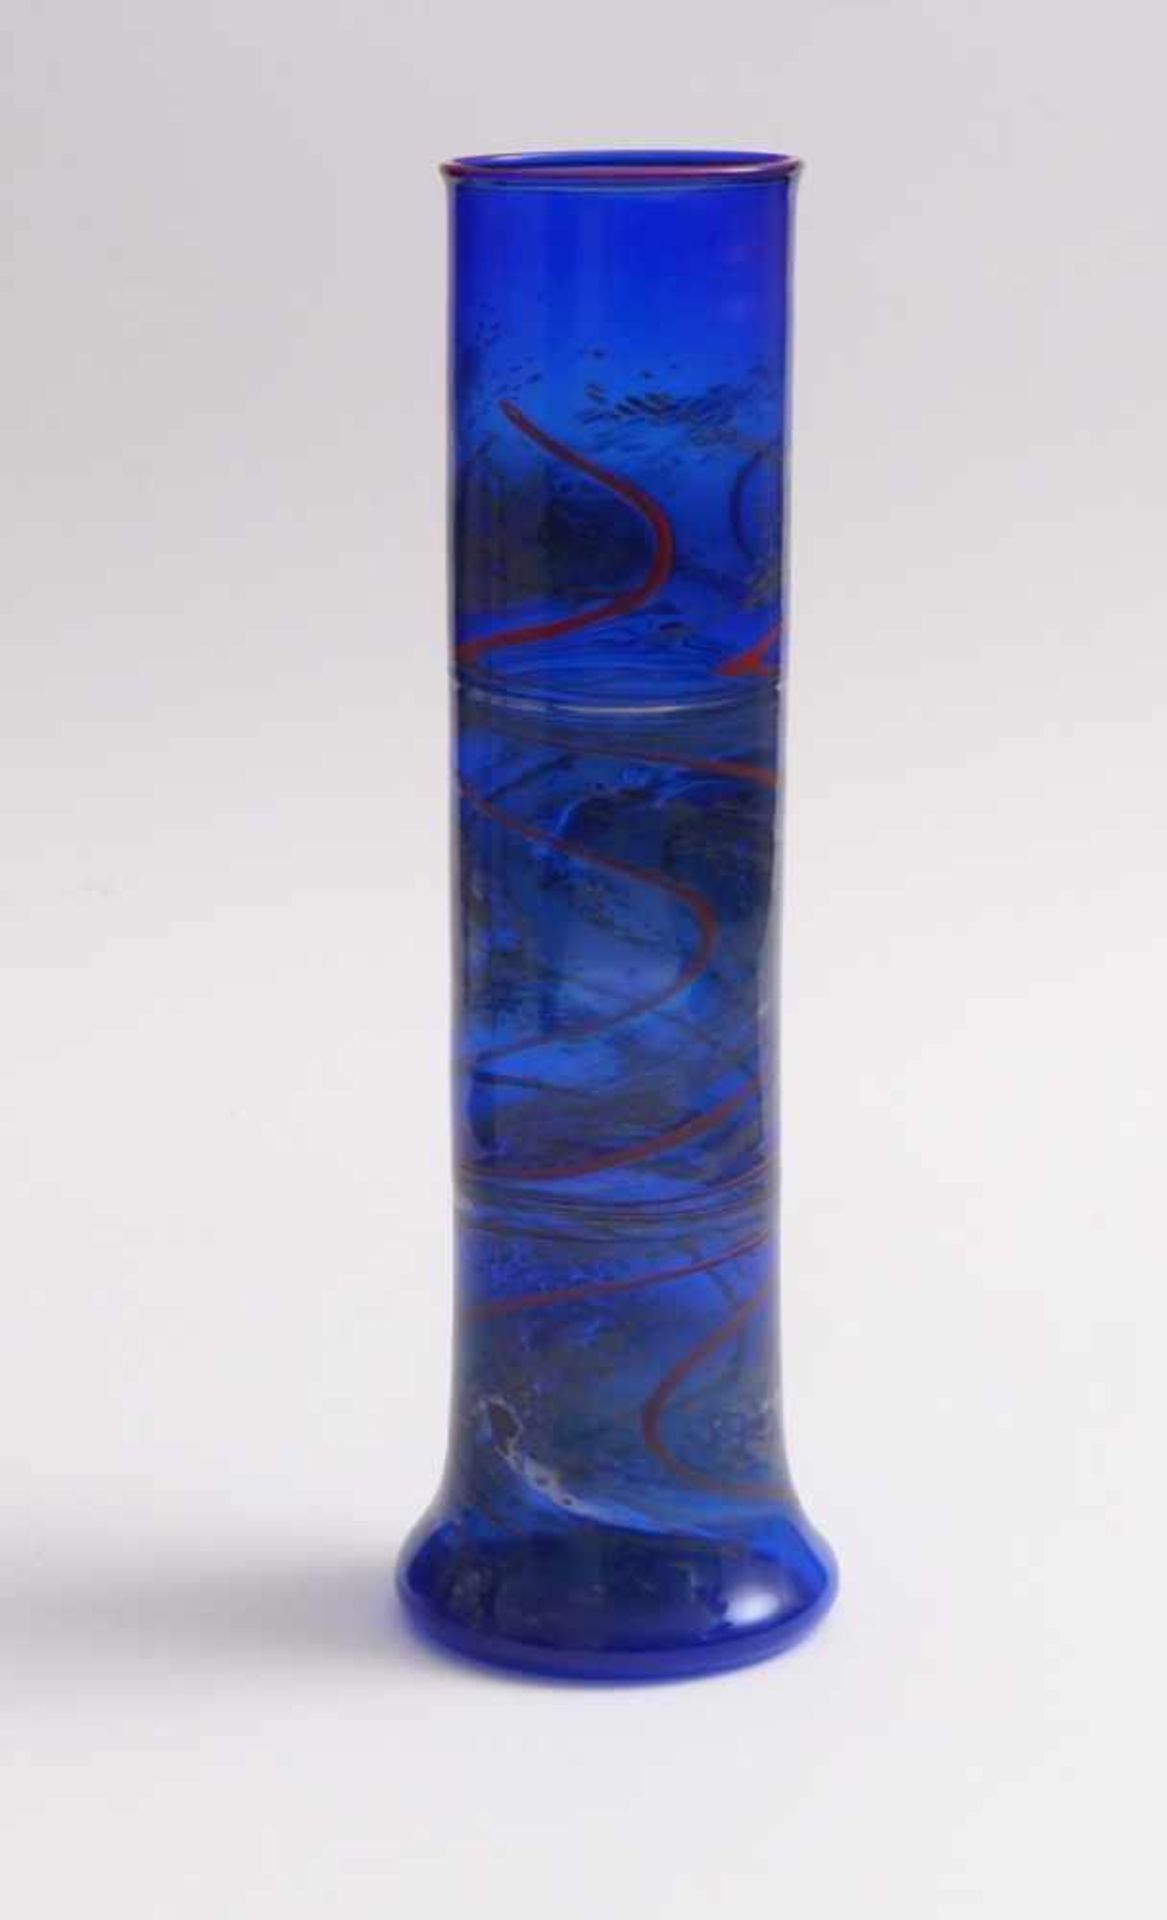 Bäz-Dölle, WalterVase(Lauscha 1935 born) Cobalt blue glass with wavy red threads and metal oxide - Bild 2 aus 2